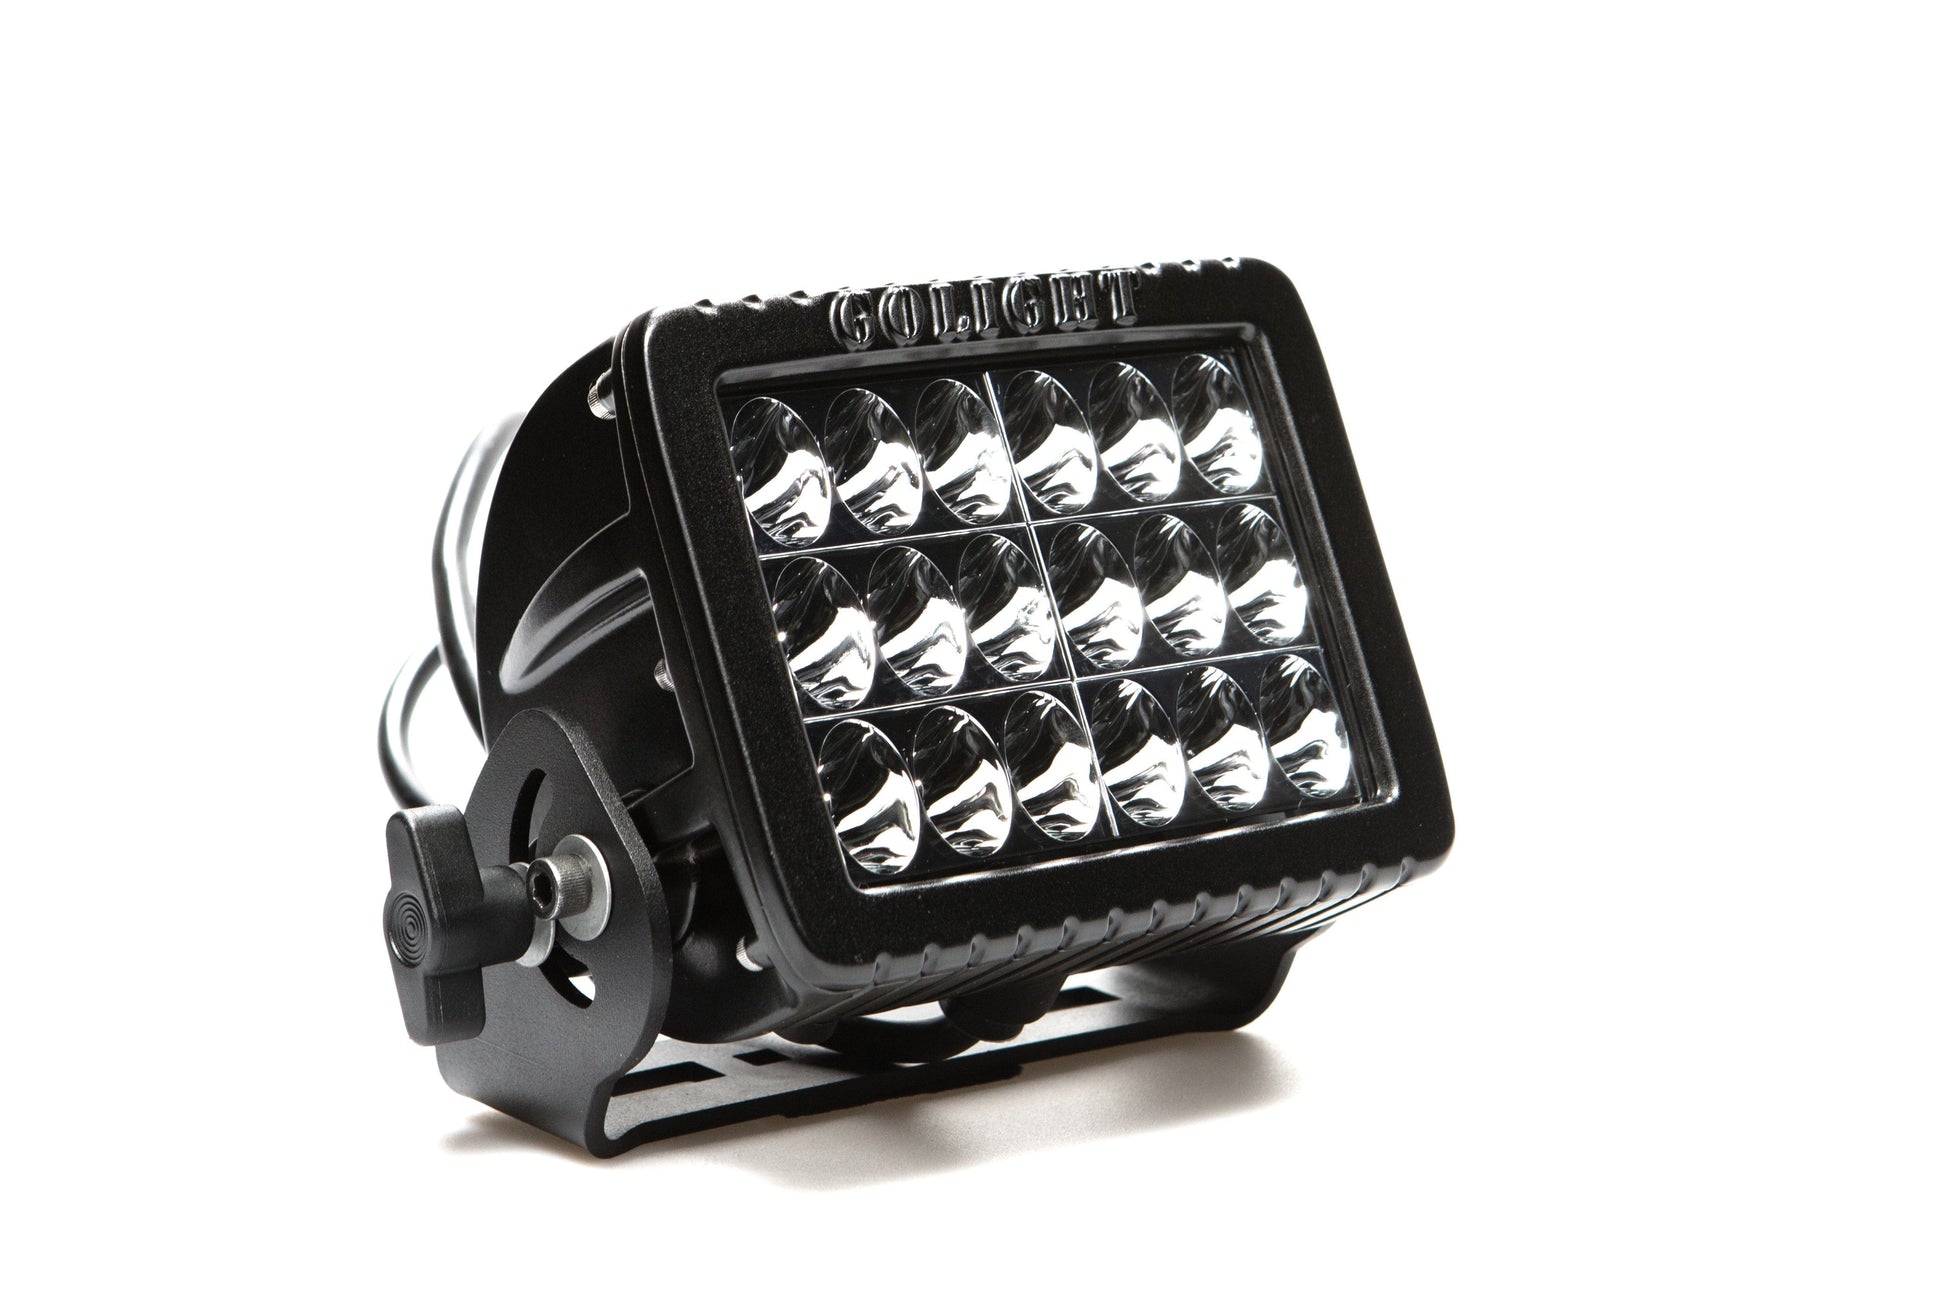 GOLIGHT GXL LED - Performance Series Floodlight & Spotlight, Black